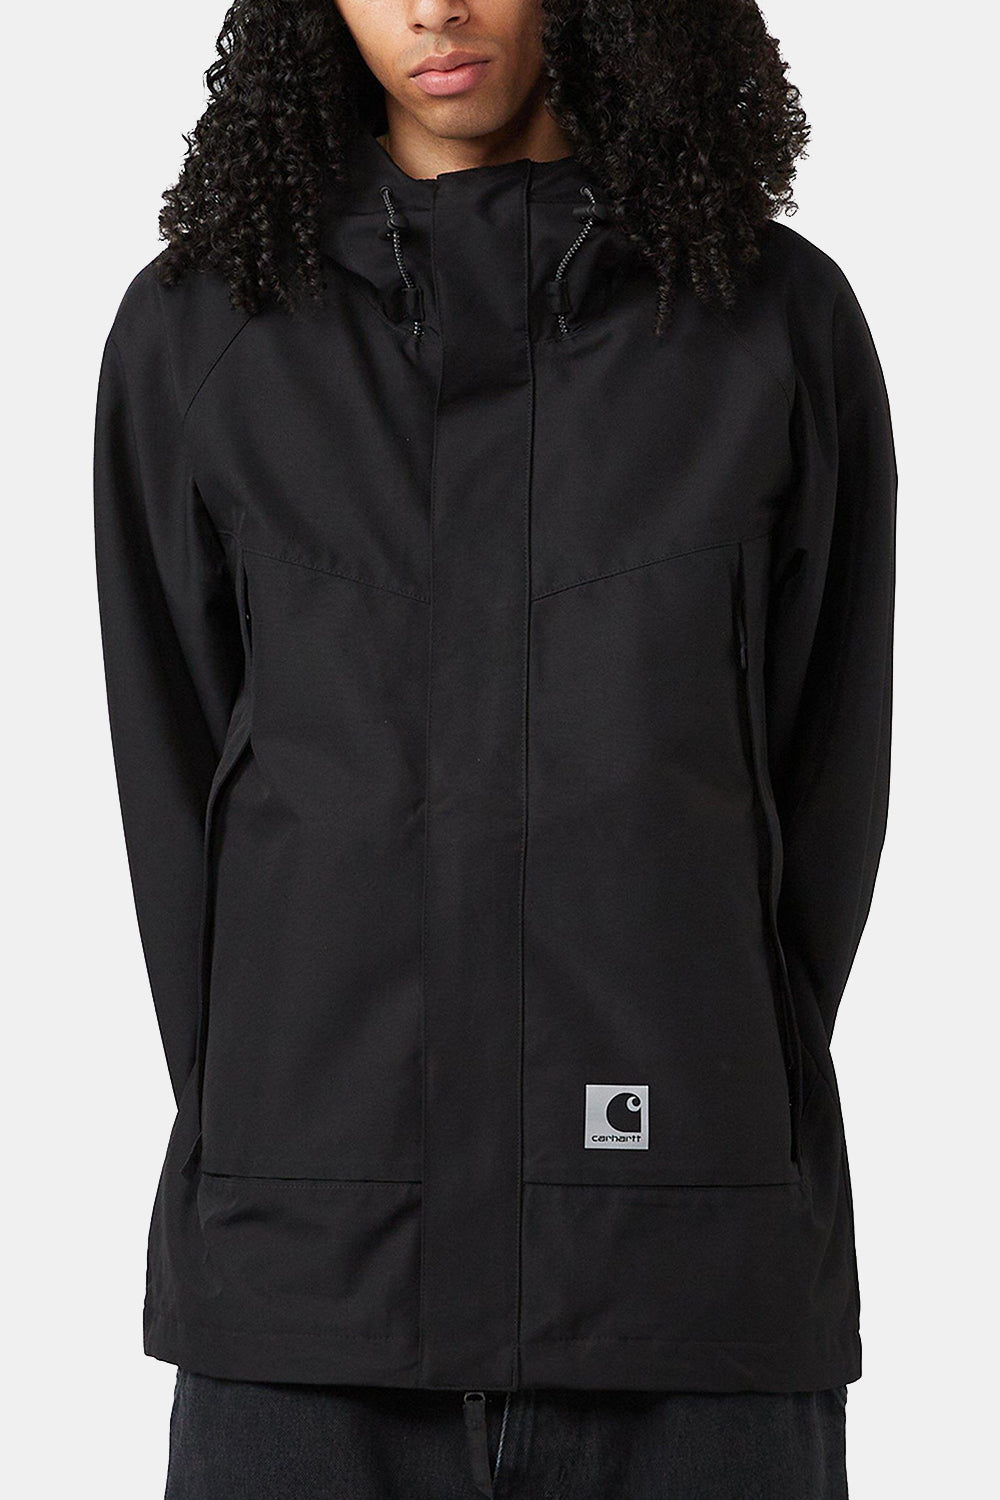 Carhartt WIP Alto Jacket (Black)